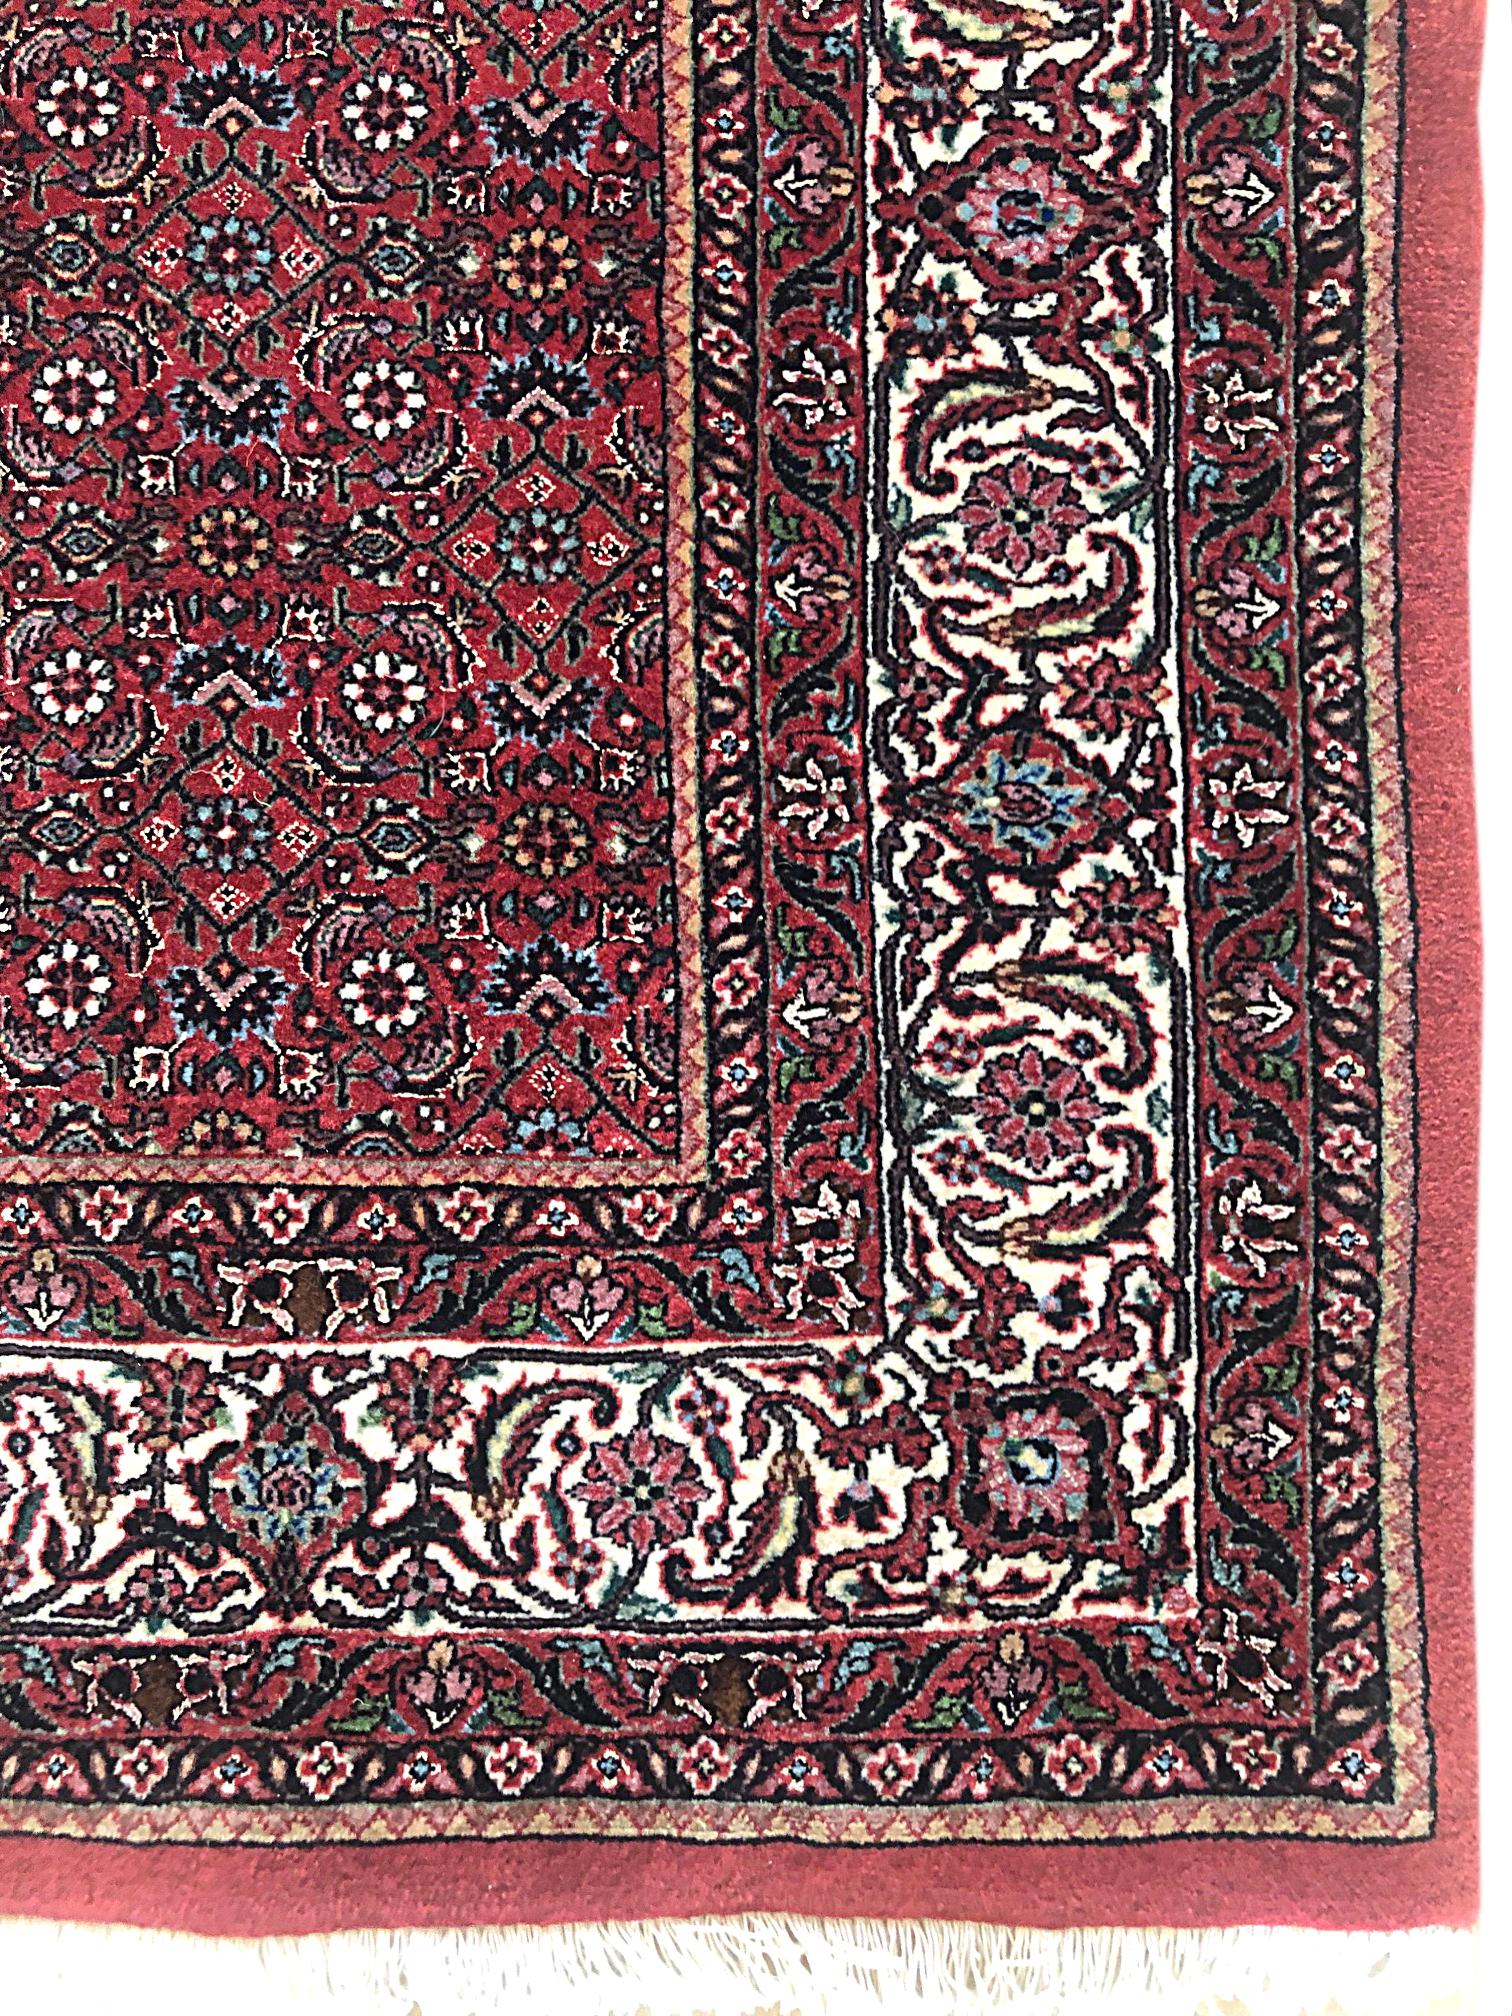 Wool Persian Hand Knotted Red All-Over Floral Herati Design Bijar 'Bidjar' Rug